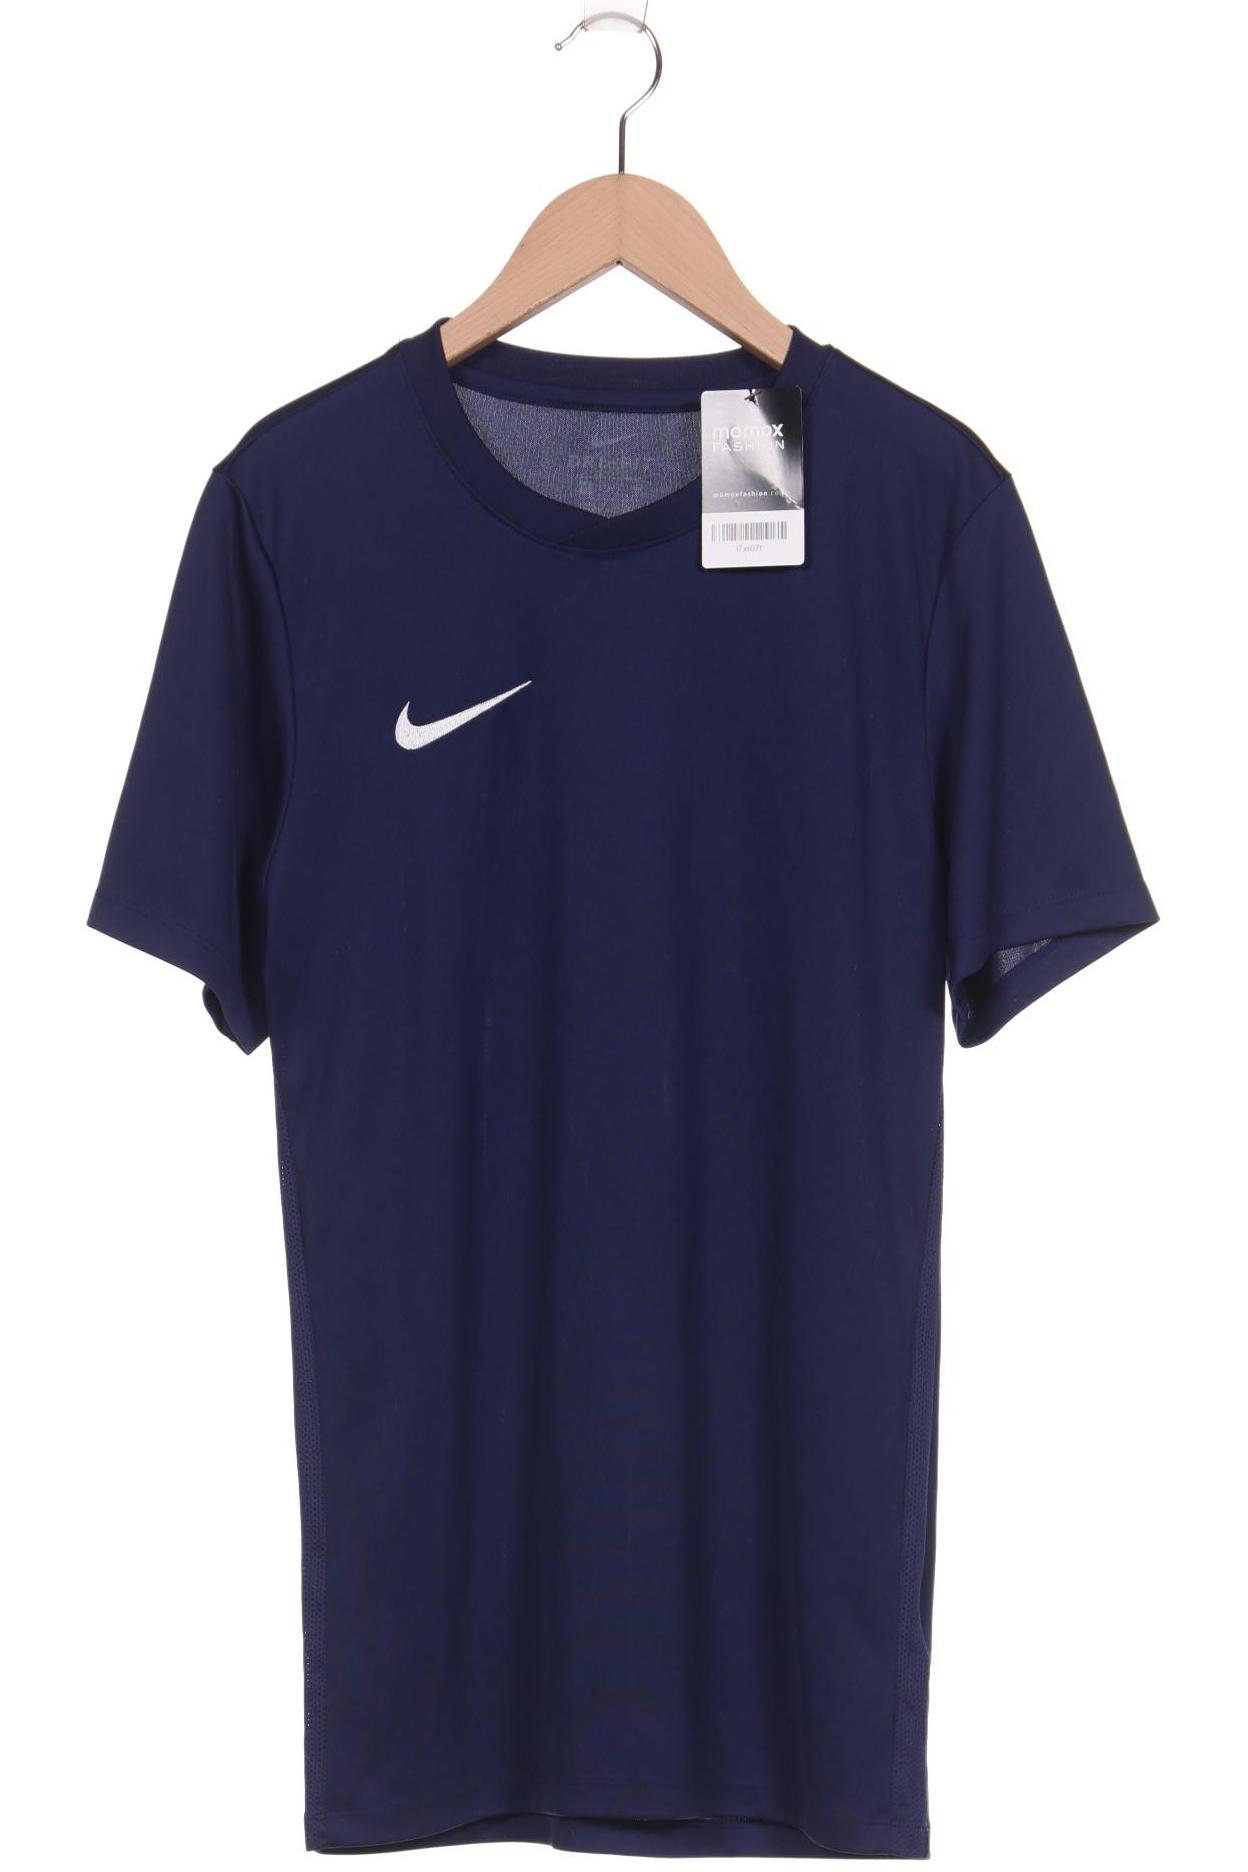 Nike Herren T-Shirt, marineblau, Gr. 46 von Nike